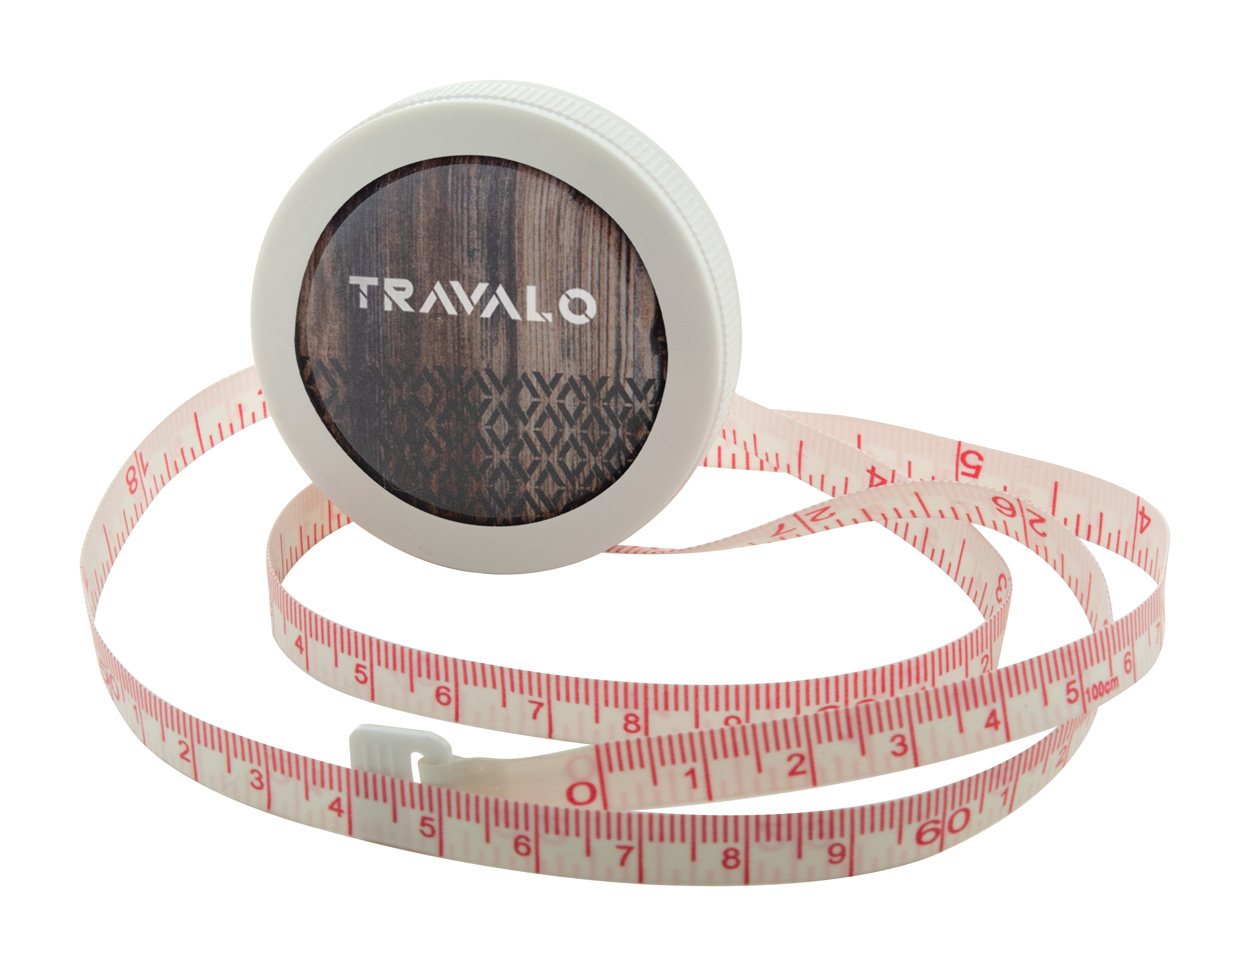 Hawkes tailor's tape measure (AP808032-01)